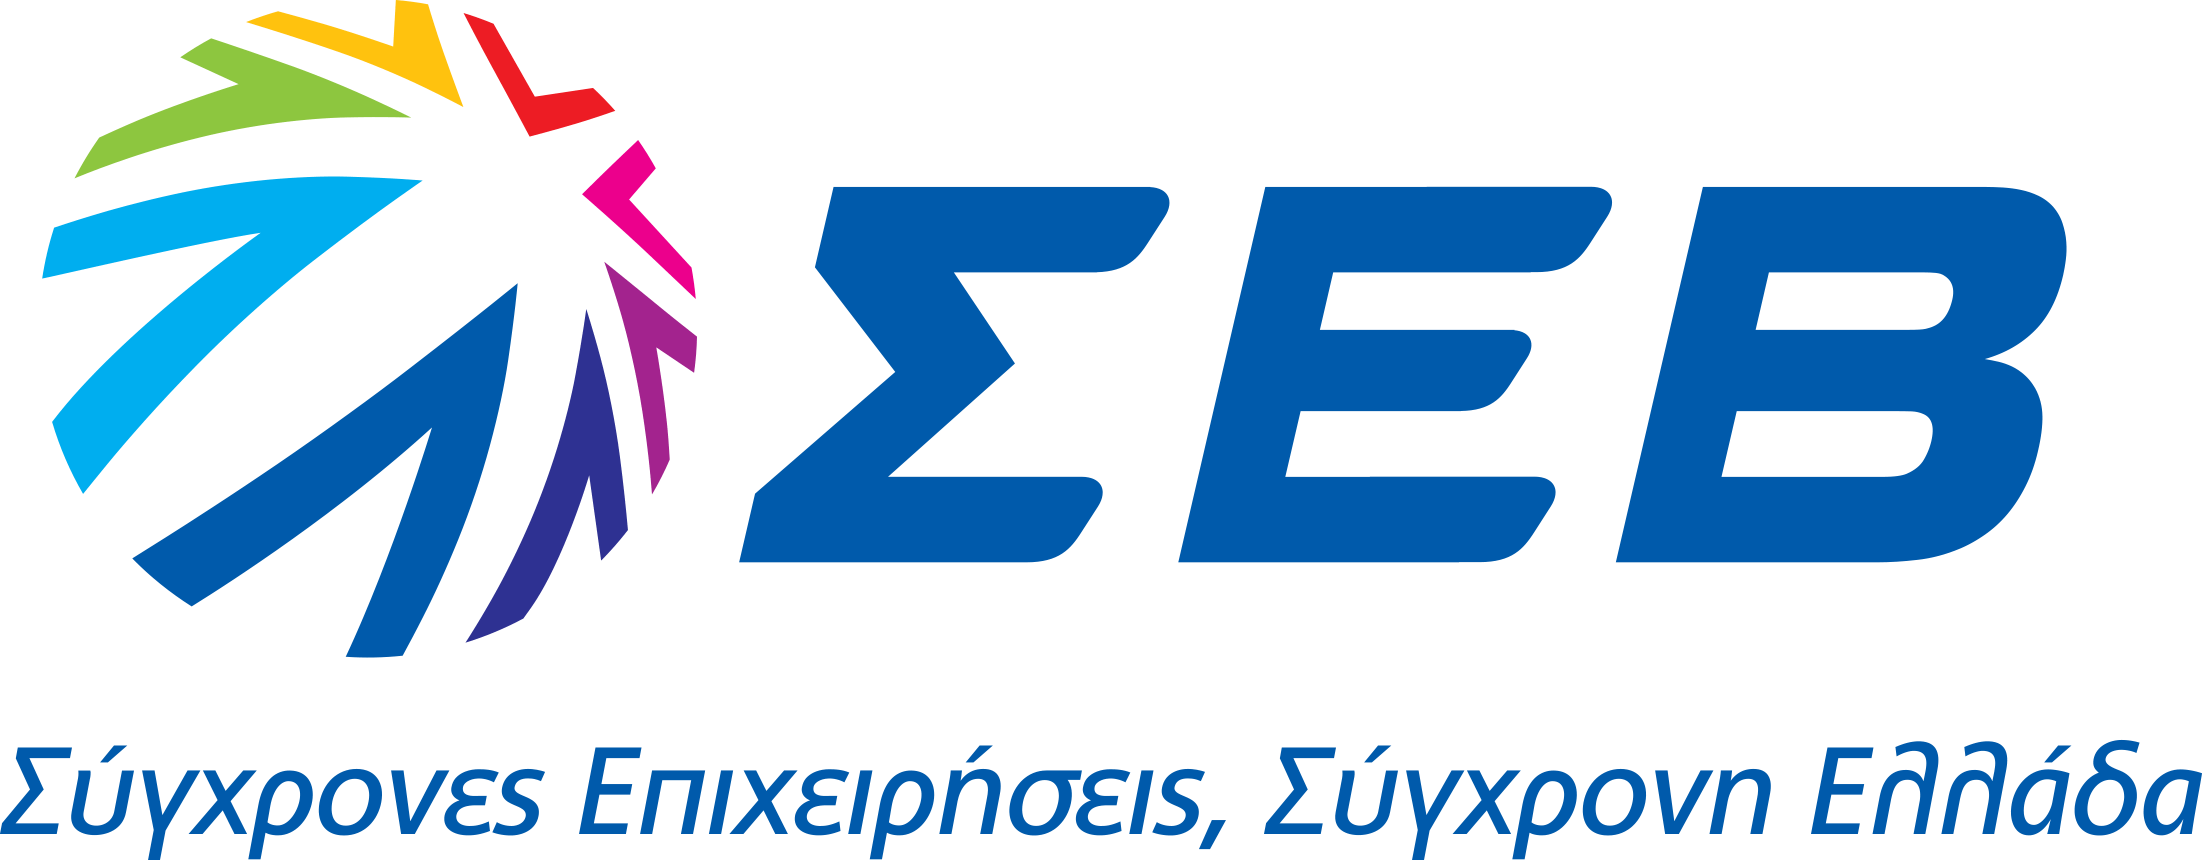 logo_sev_gr_high